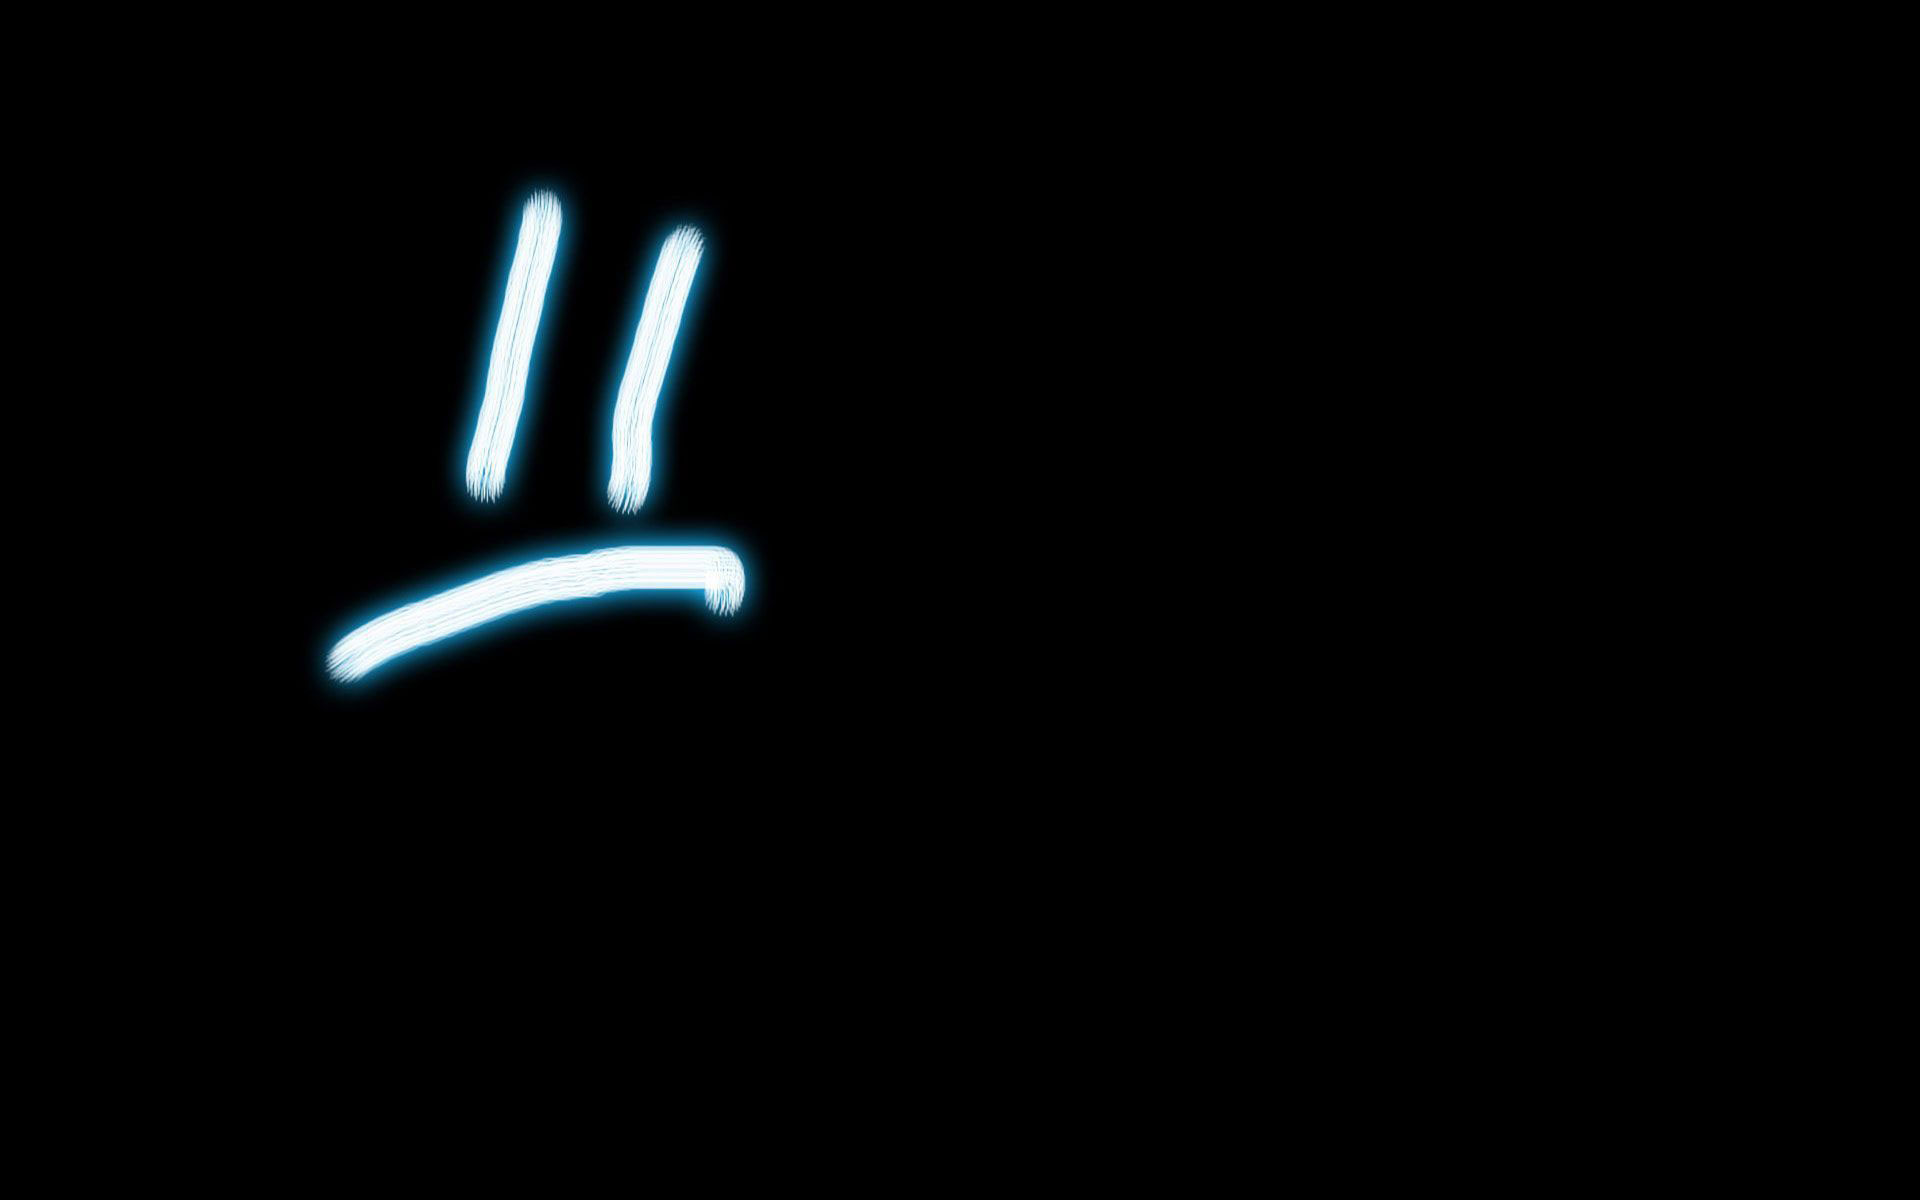 A sad face drawn in blue light on a black background - Sad